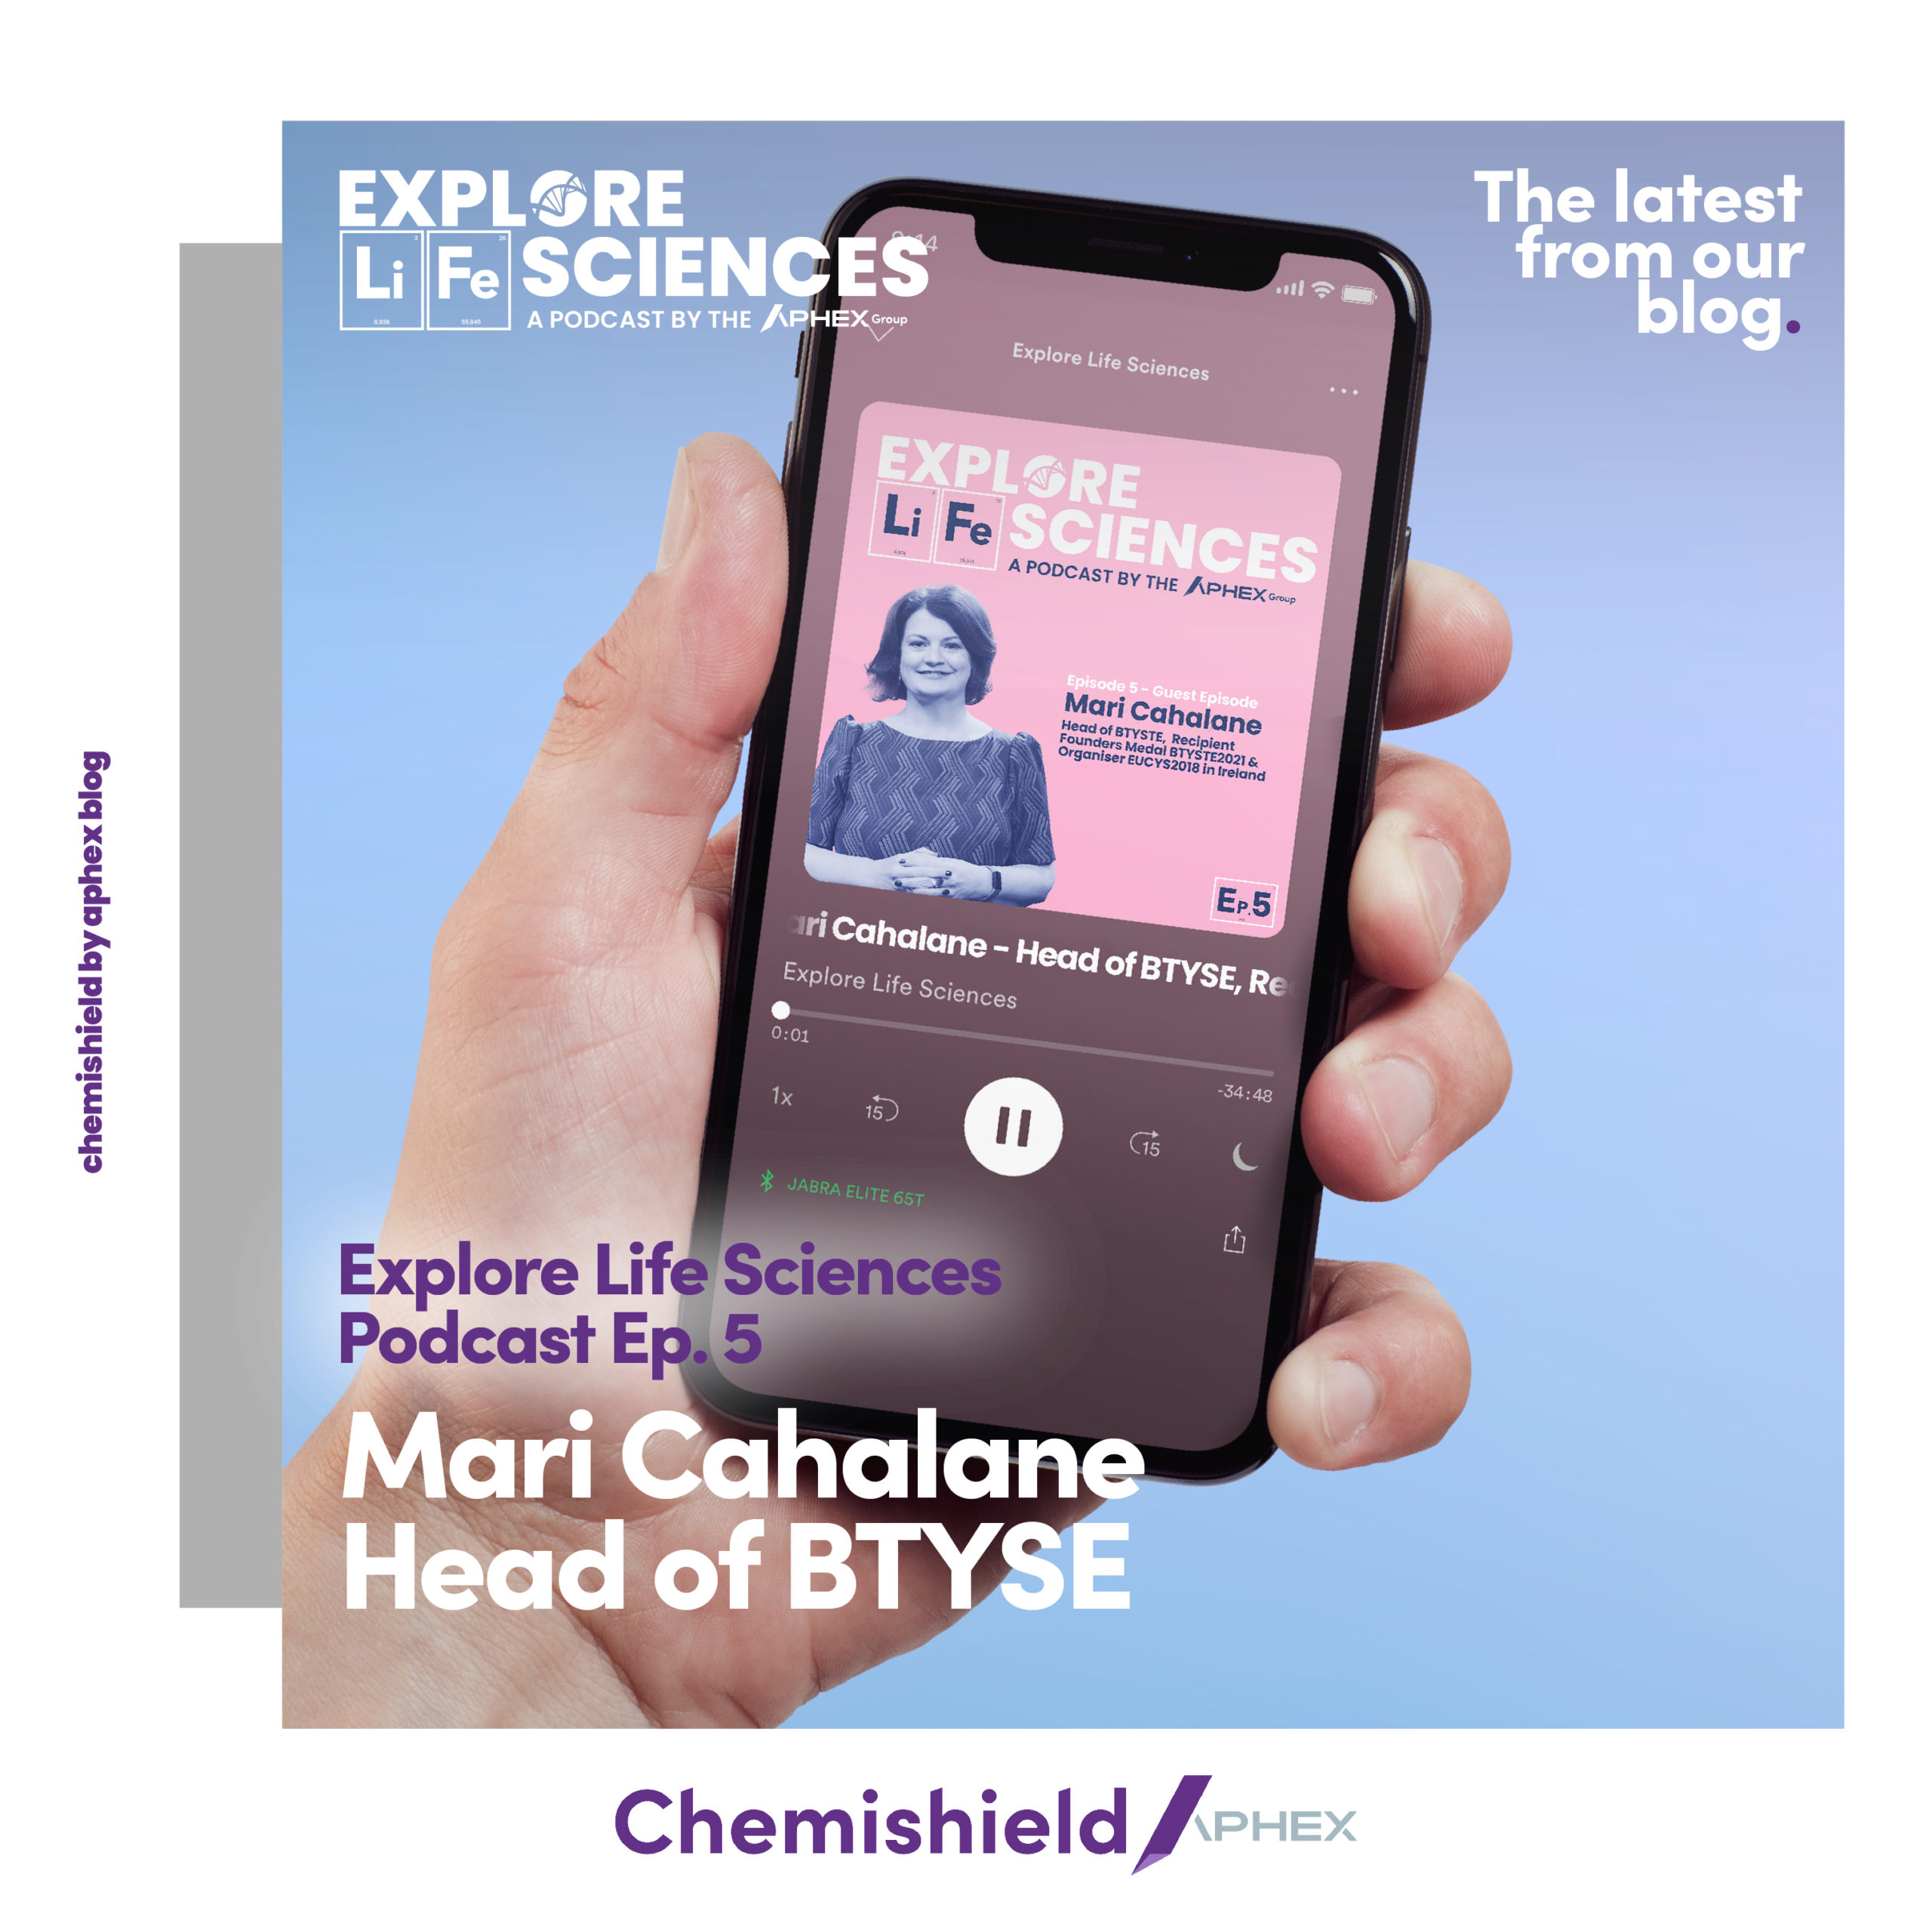 Mari Cahalane - Explore Life Sciences podcast